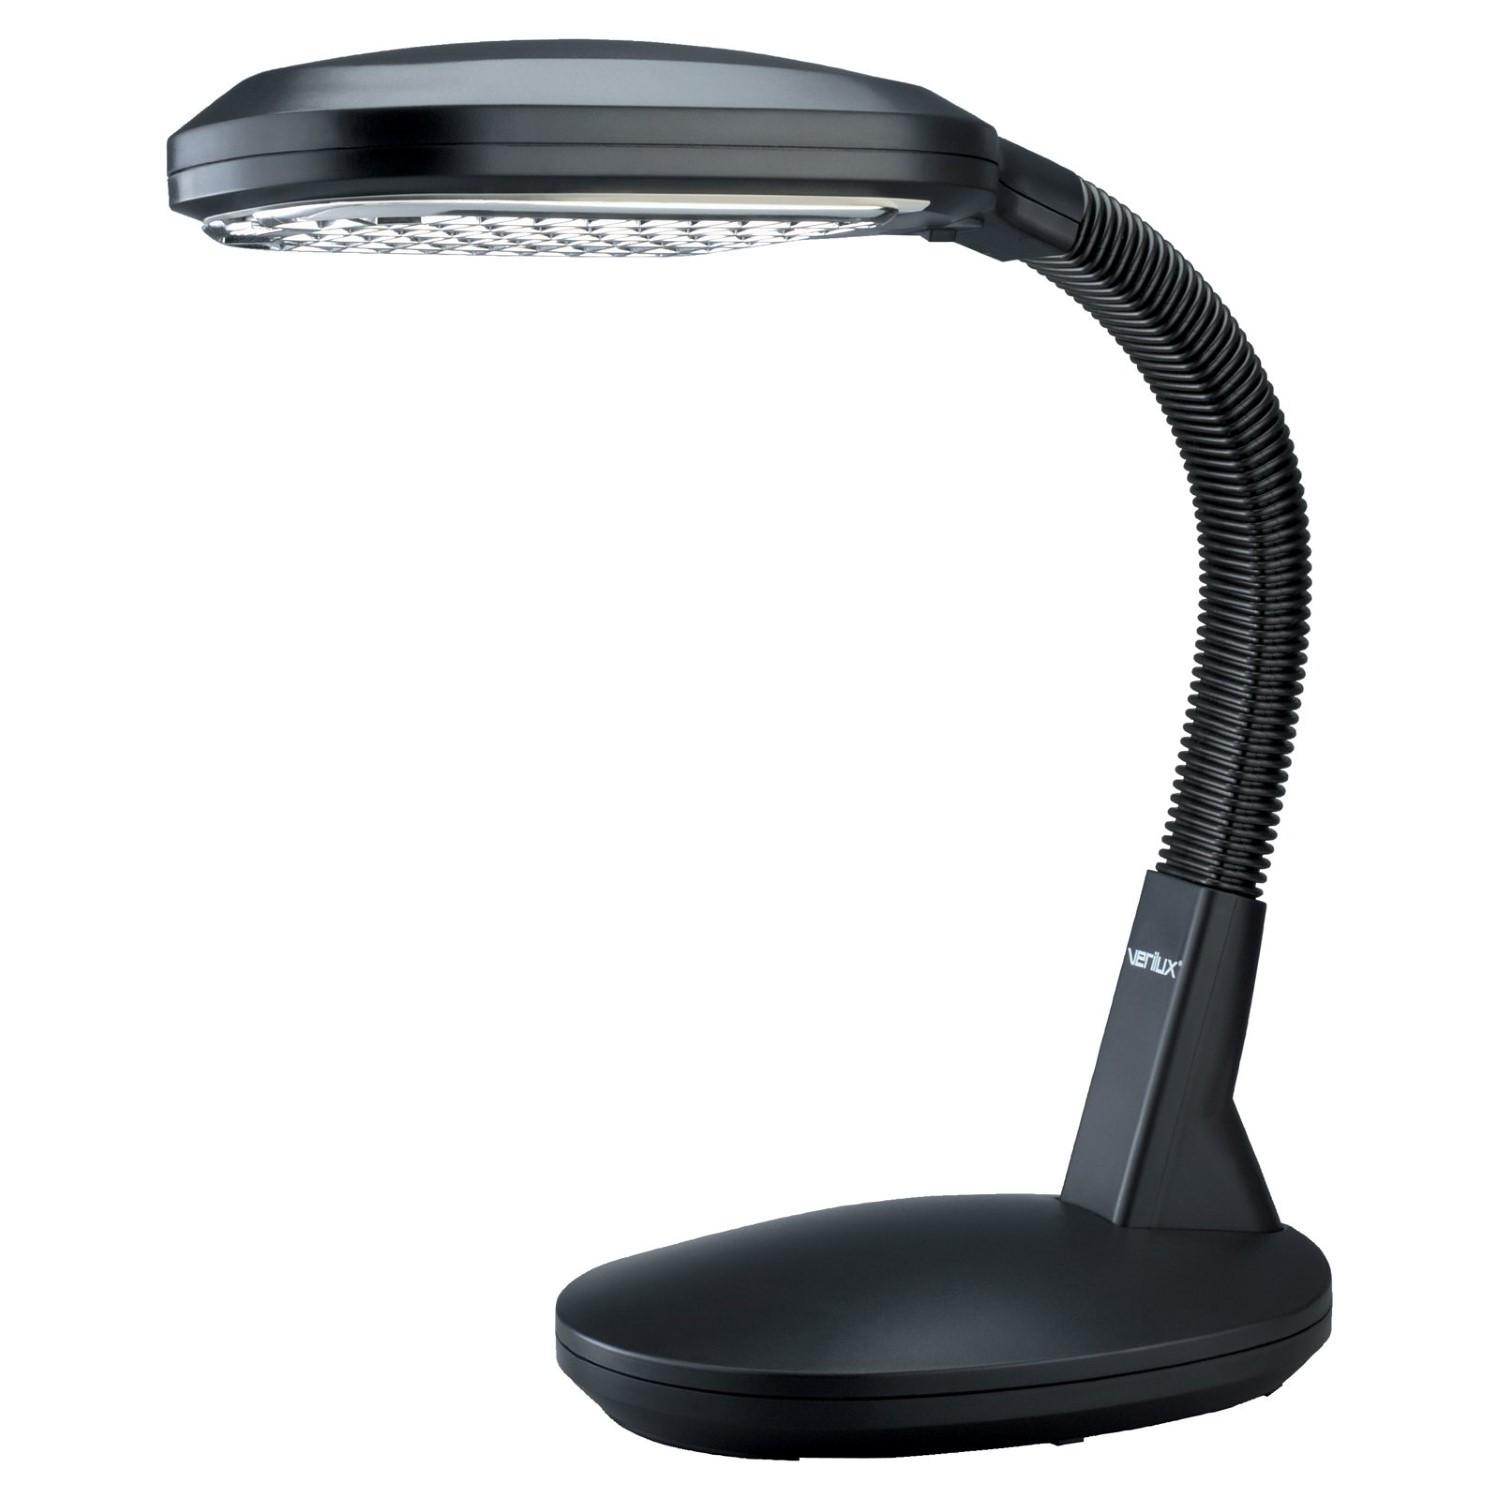 Best ideas about Verilux Desk Lamp
. Save or Pin Verilux Original Deluxe Natural Spectrum Desk Lamp Now.